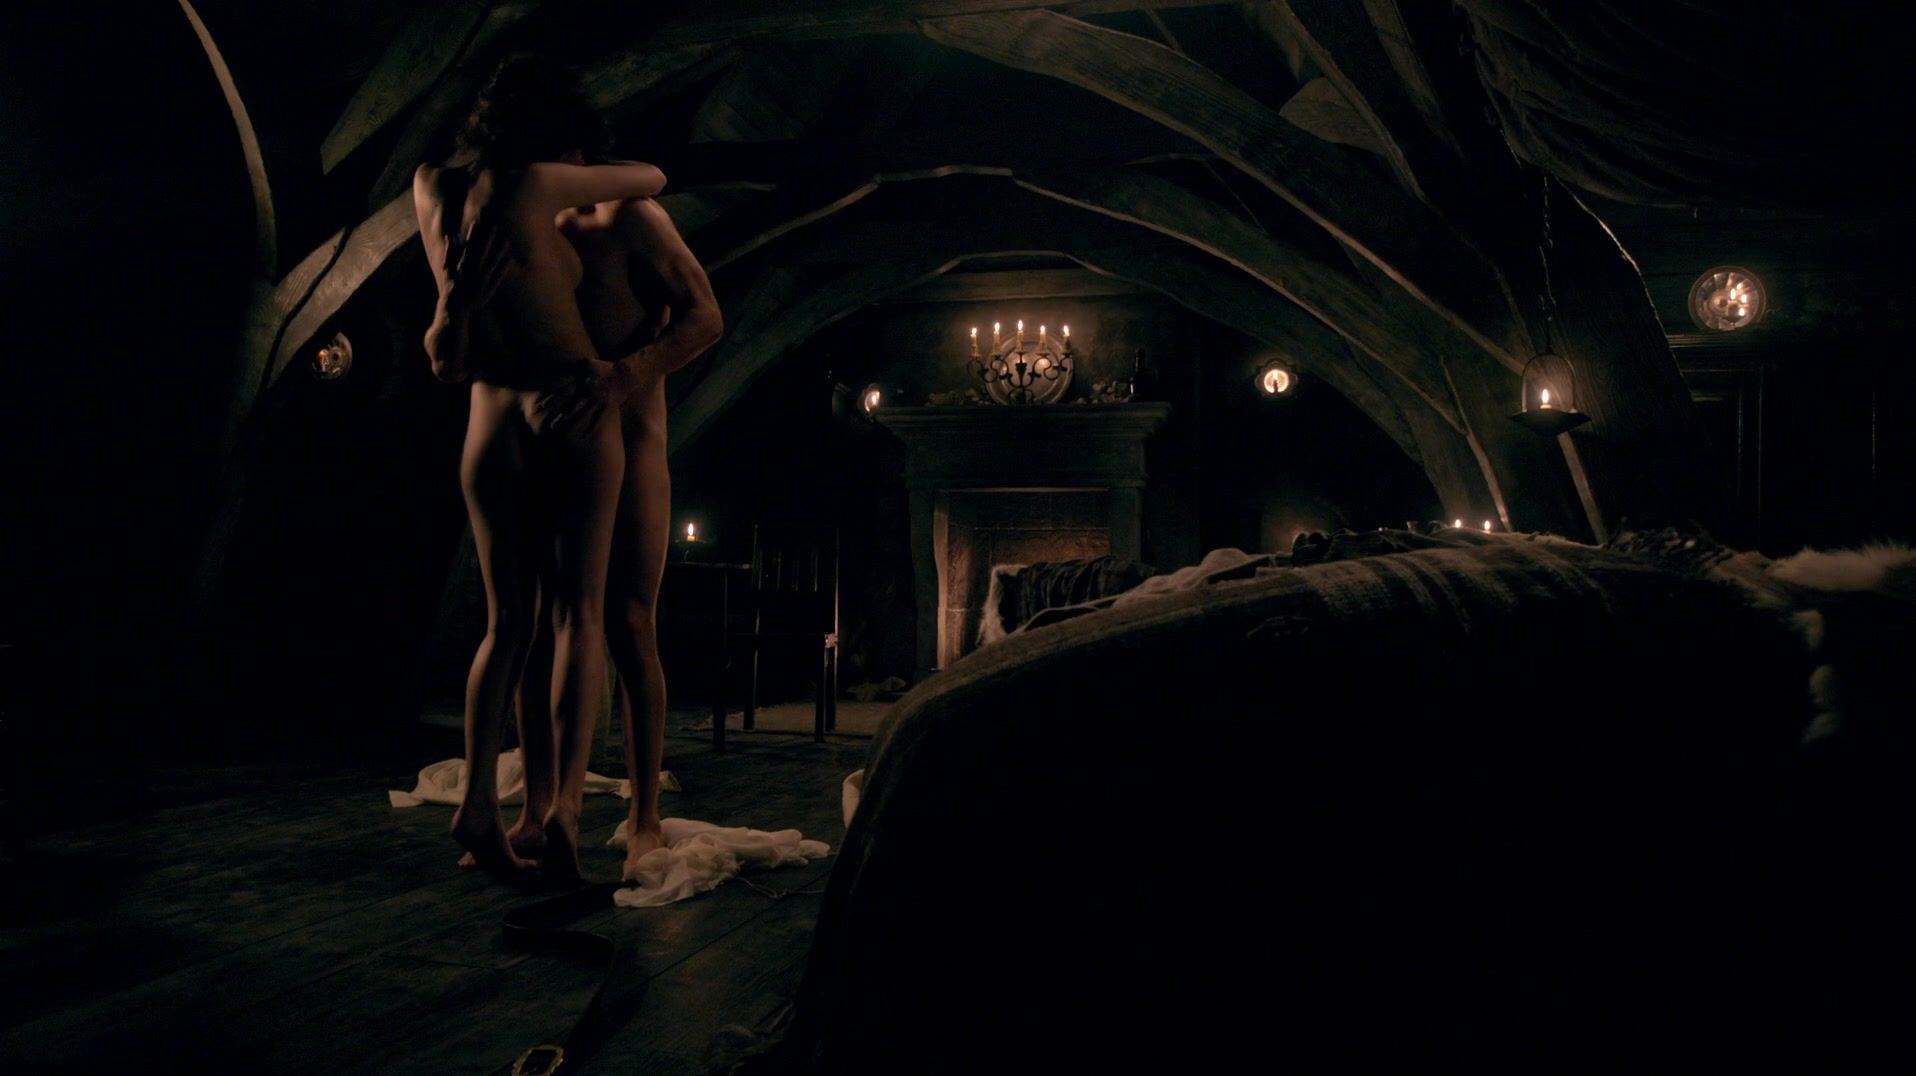 HellXX Sex scene of naked Caitriona Balfe | TV show "Outlander" Uniform